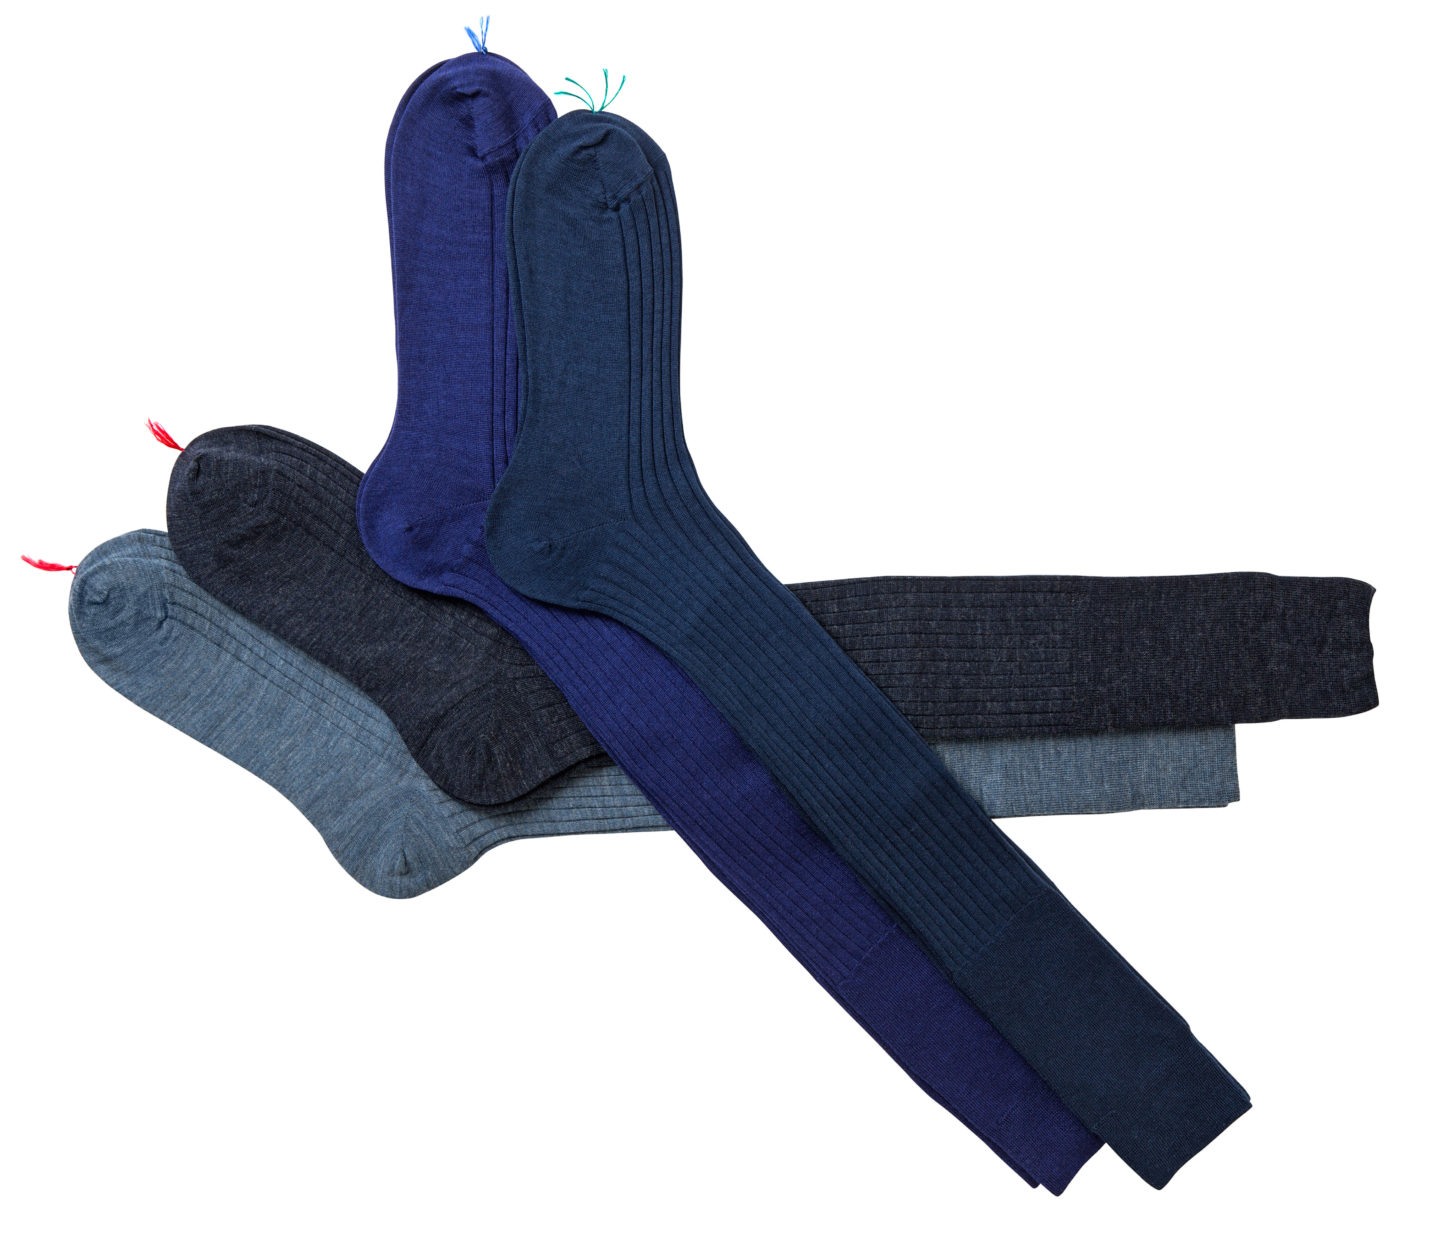 Bresciani styling concept blu socks